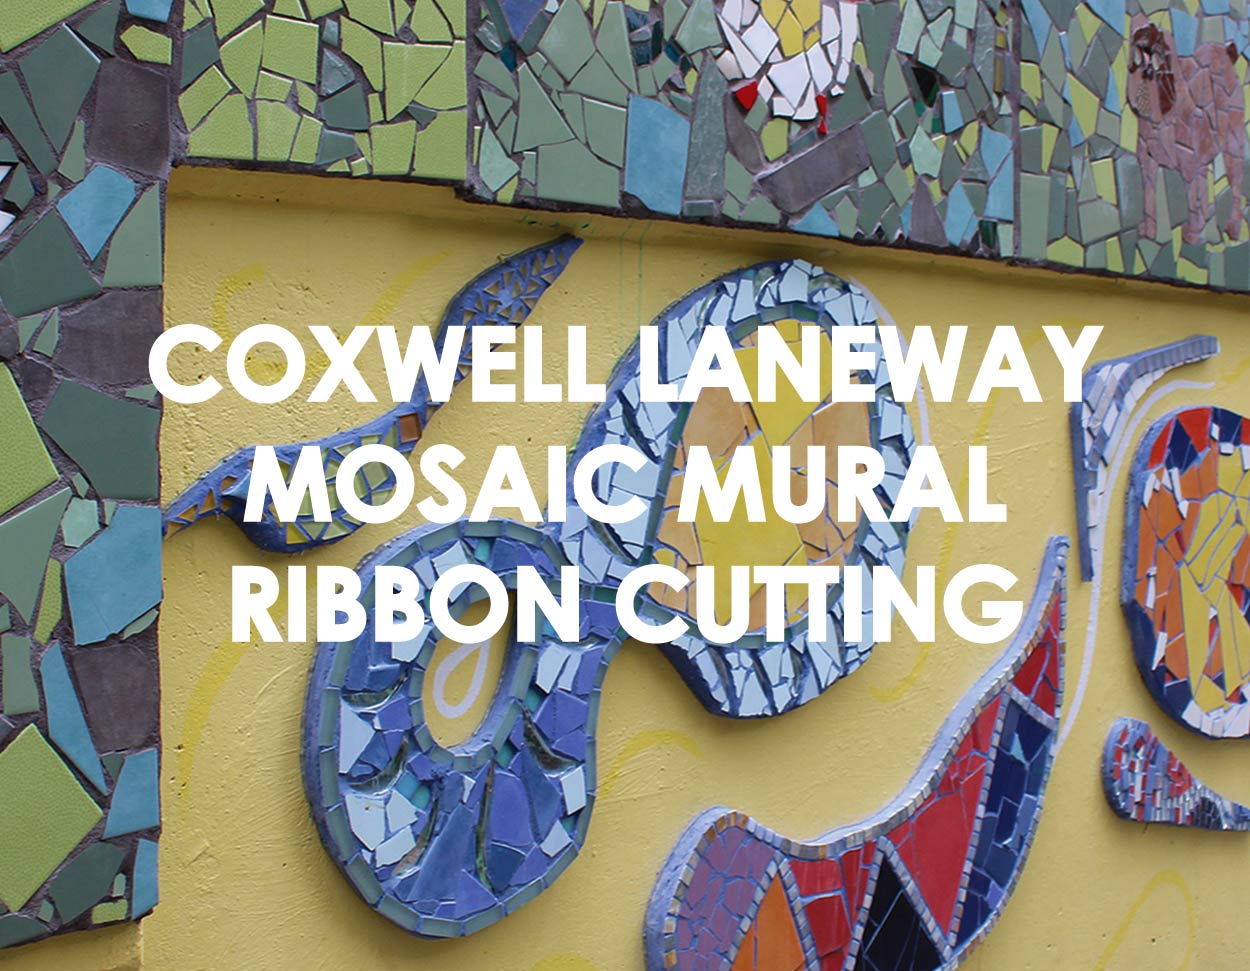 Coxwell Laneway Mosaic Mural Ribbon Cutting